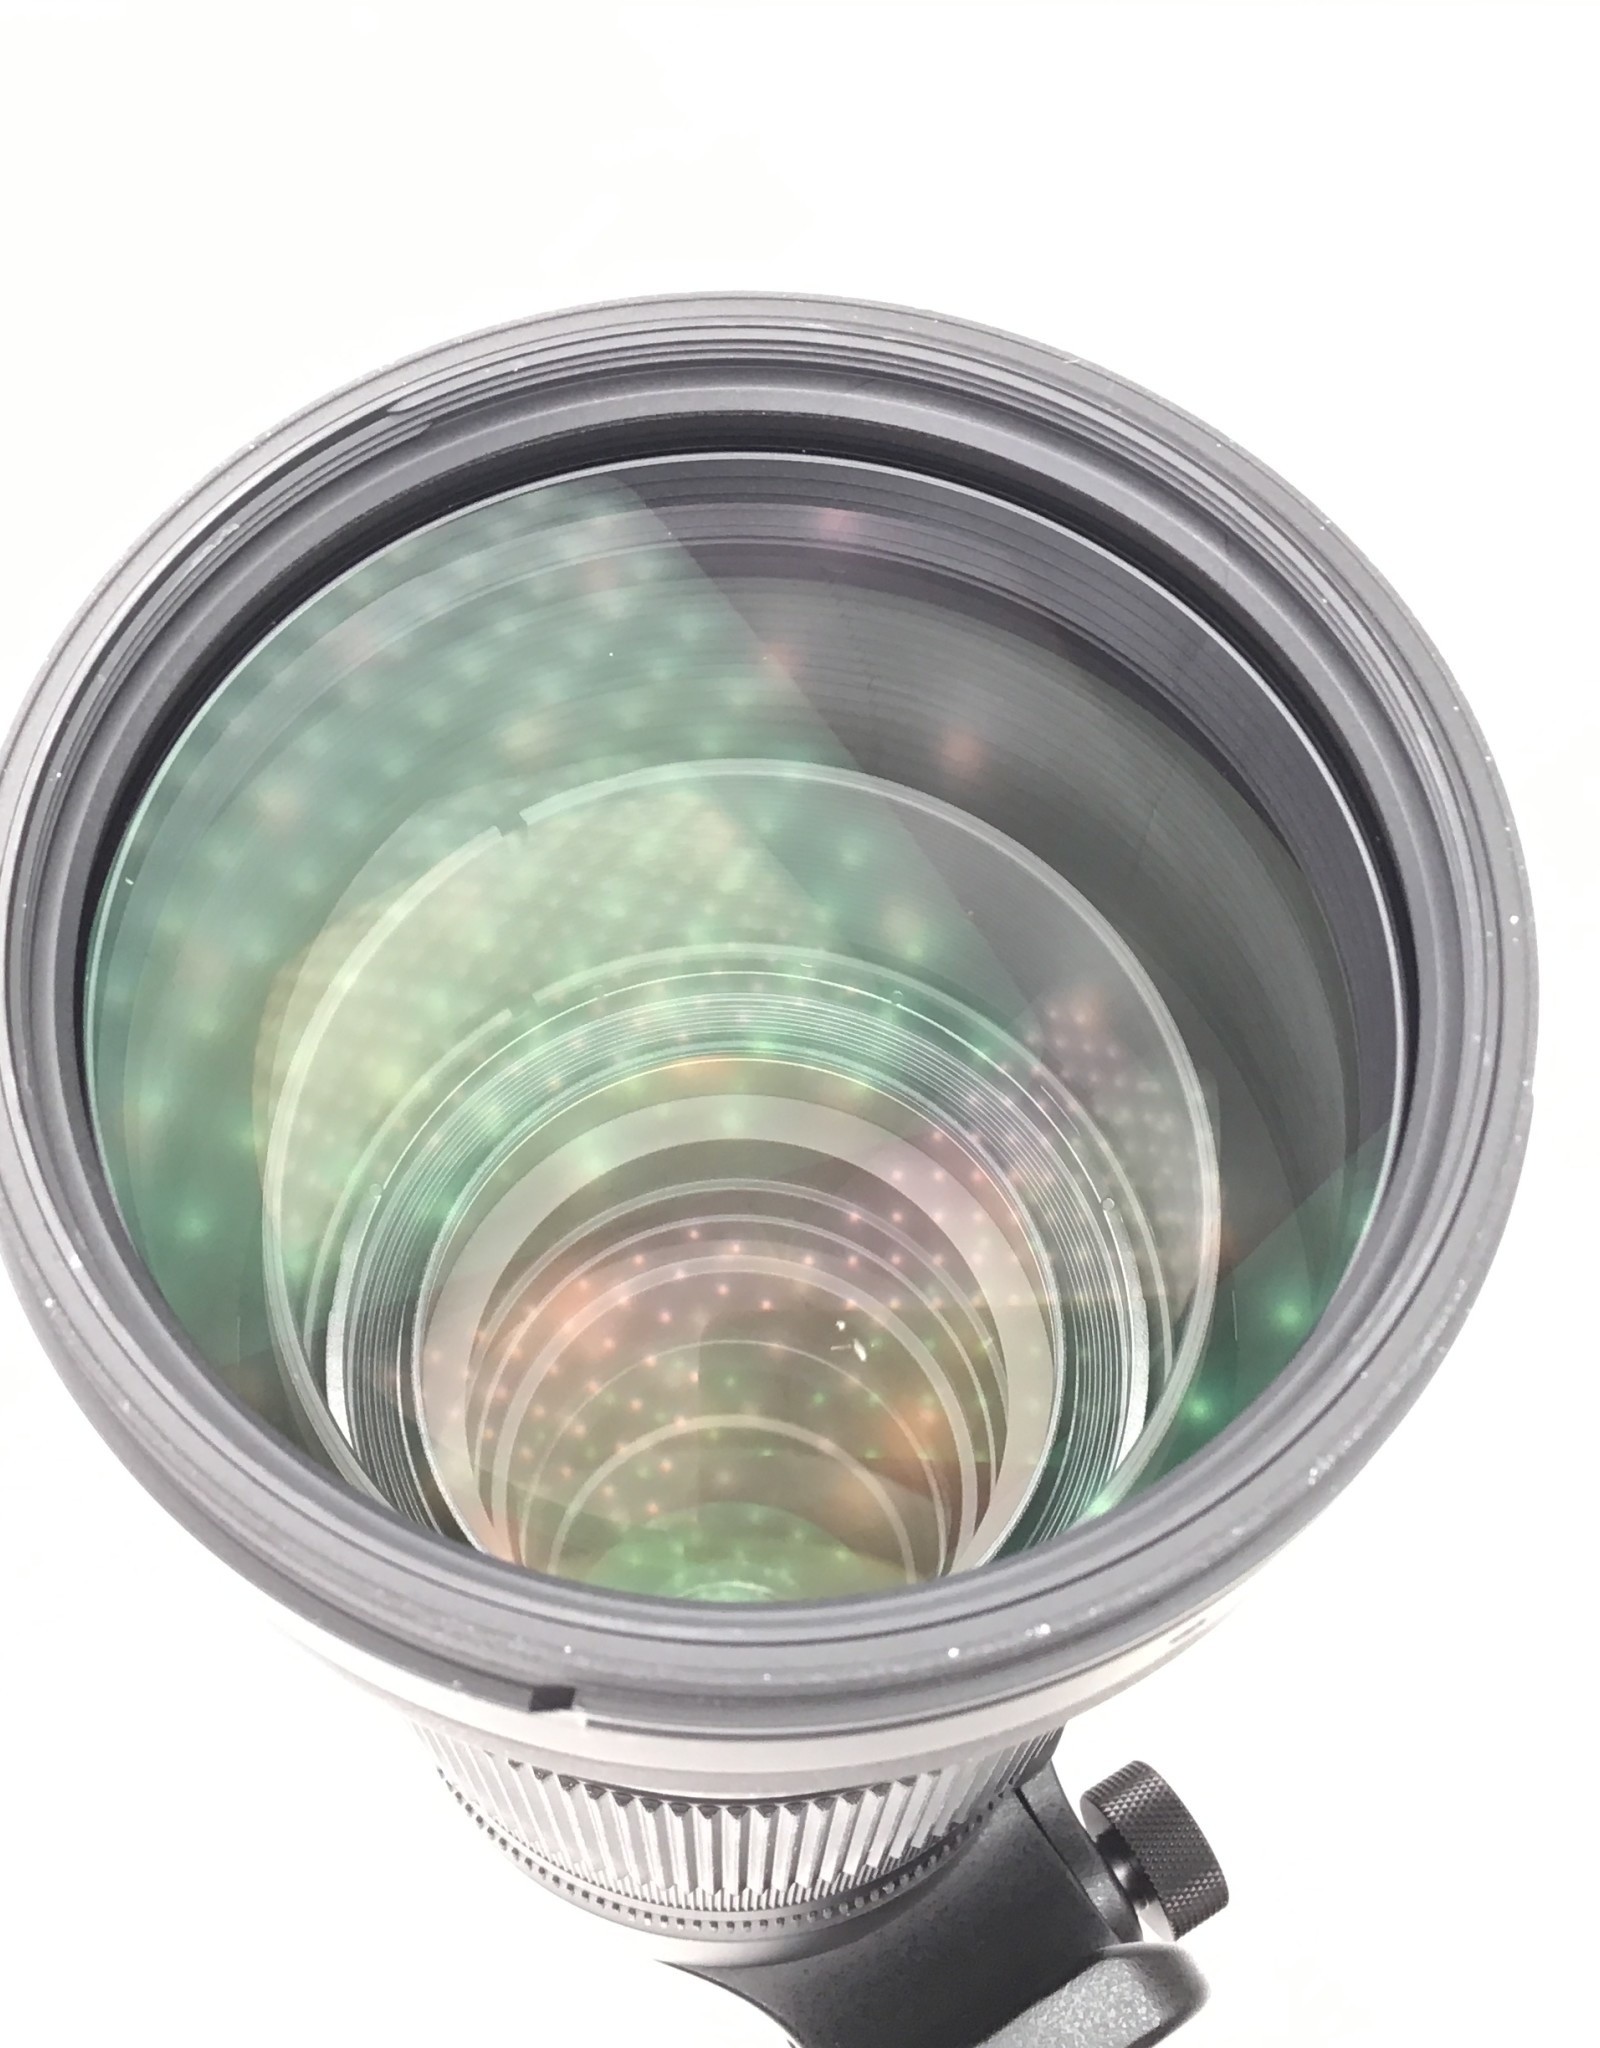 SIGMA Sigma 150-600mm f5-6.3 DG Contemporary Lens for Nikon Used Good